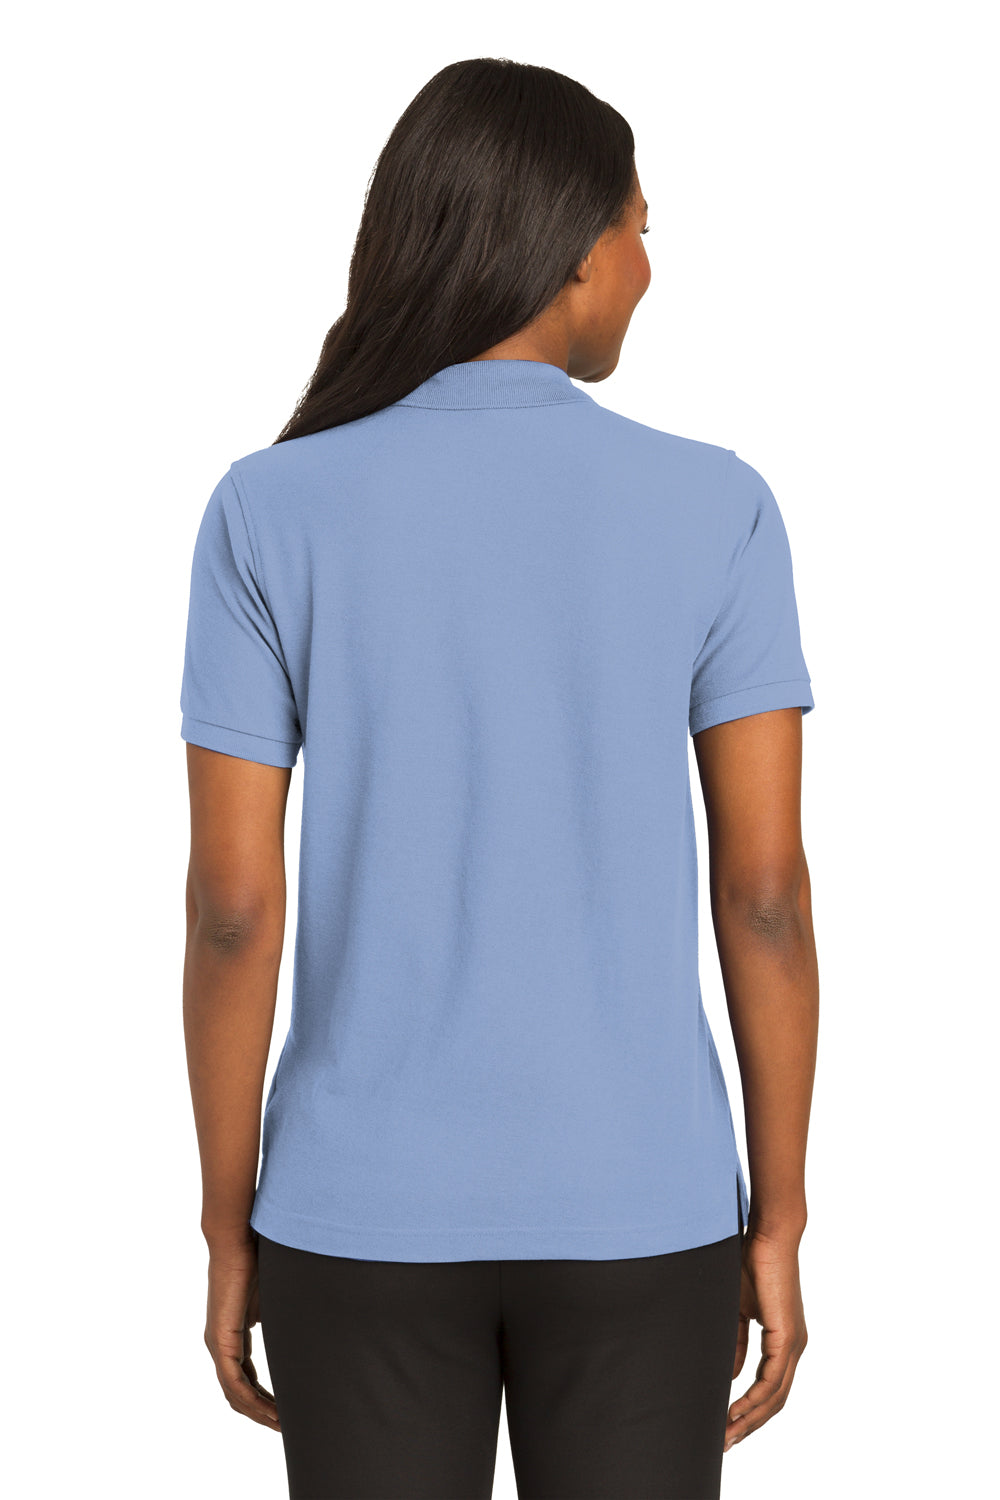 Nautica Womens Polo T Shirt Large L Turquoise Blue Logo Cotton Short Sleeve